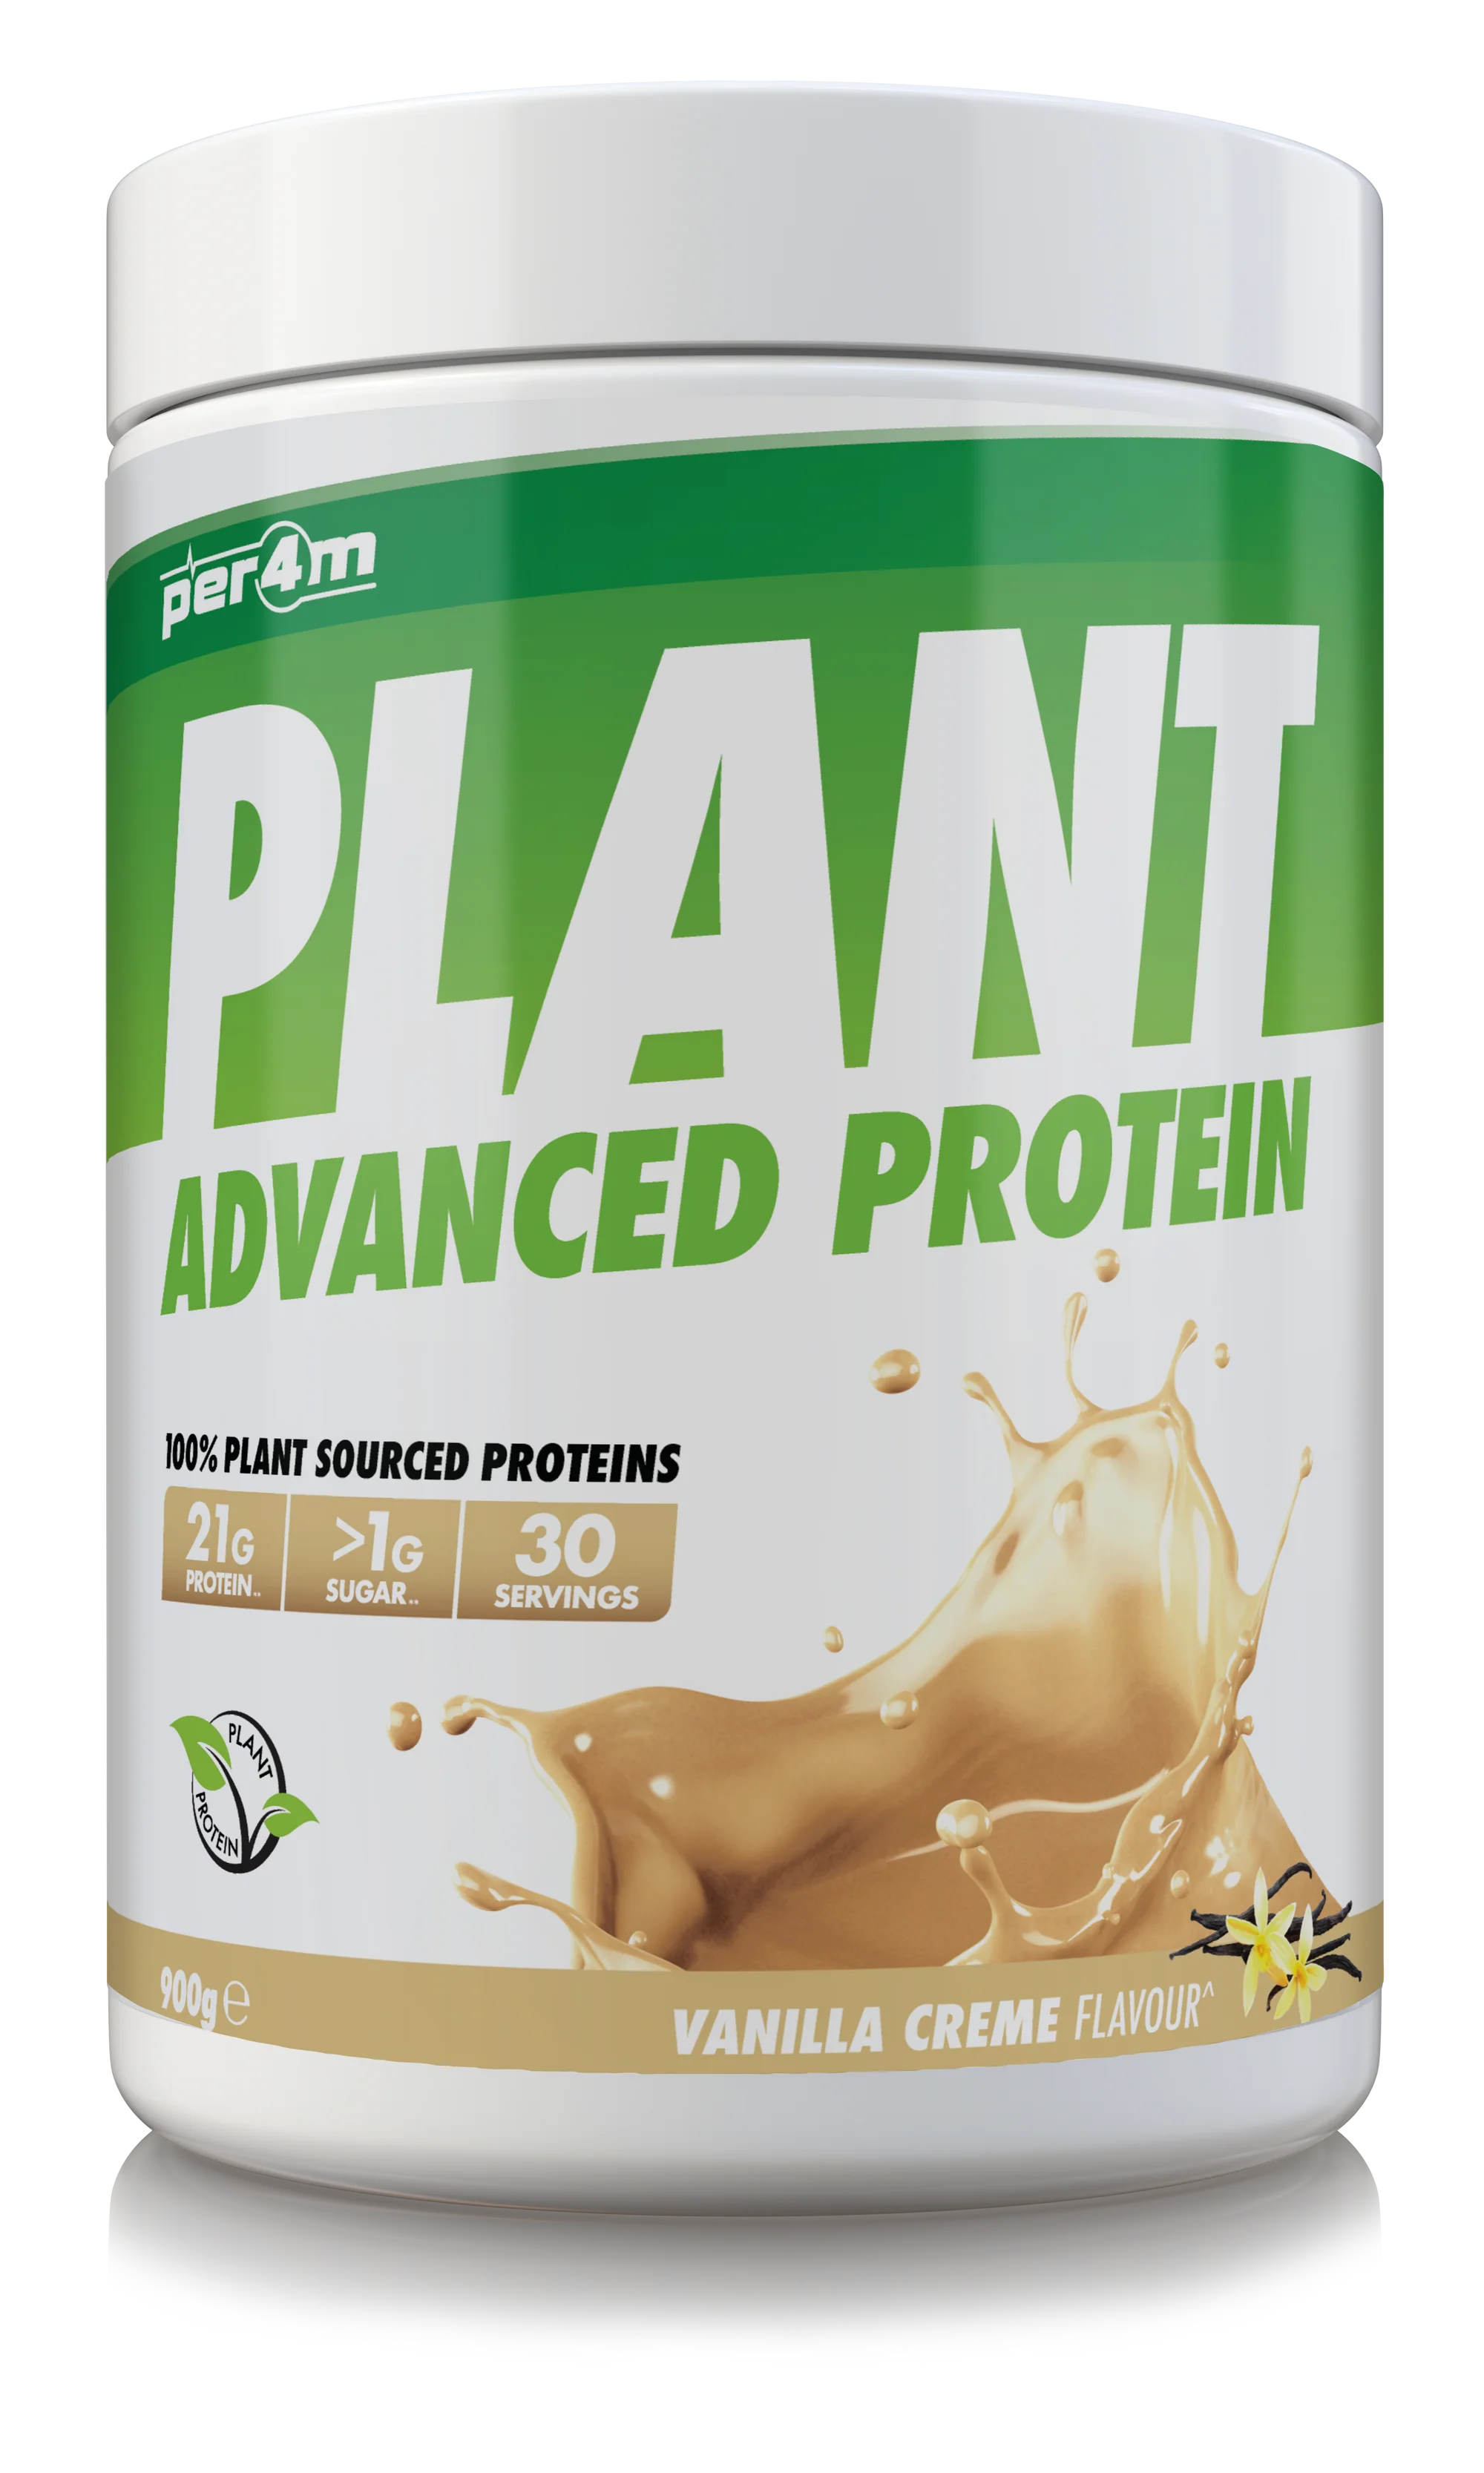 Per4m Plant Advanced Vegan Protein Powder